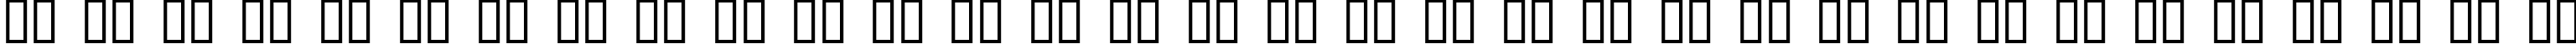 Пример написания русского алфавита шрифтом ziperhead